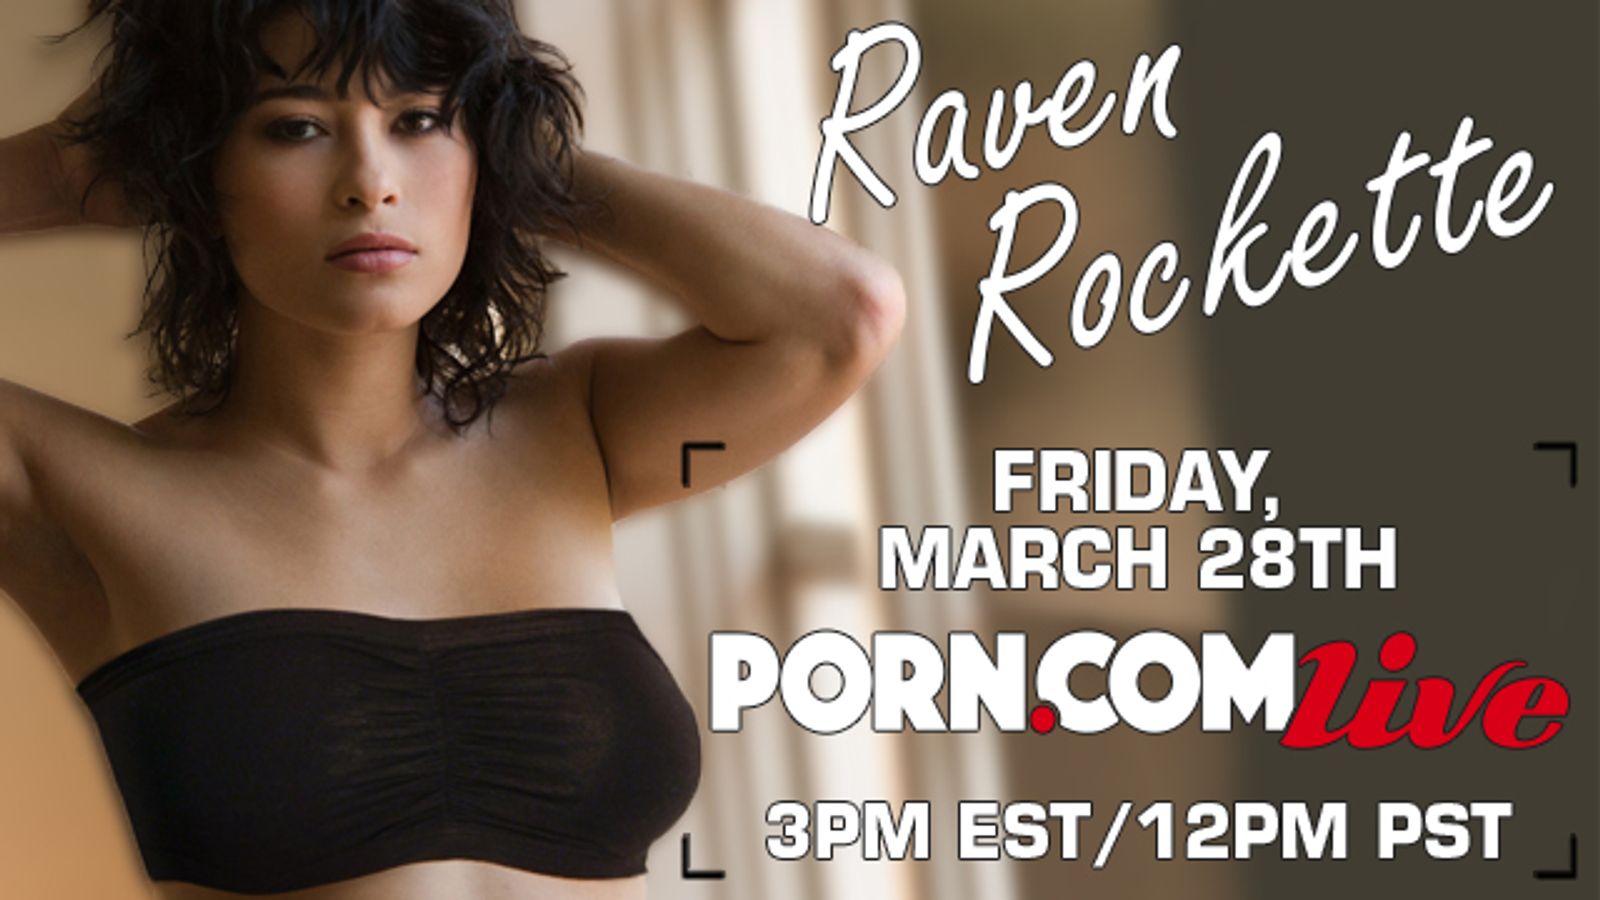 Porn.com Presents Rocker Chick Raven Rockette's Free Cam Show This Friday